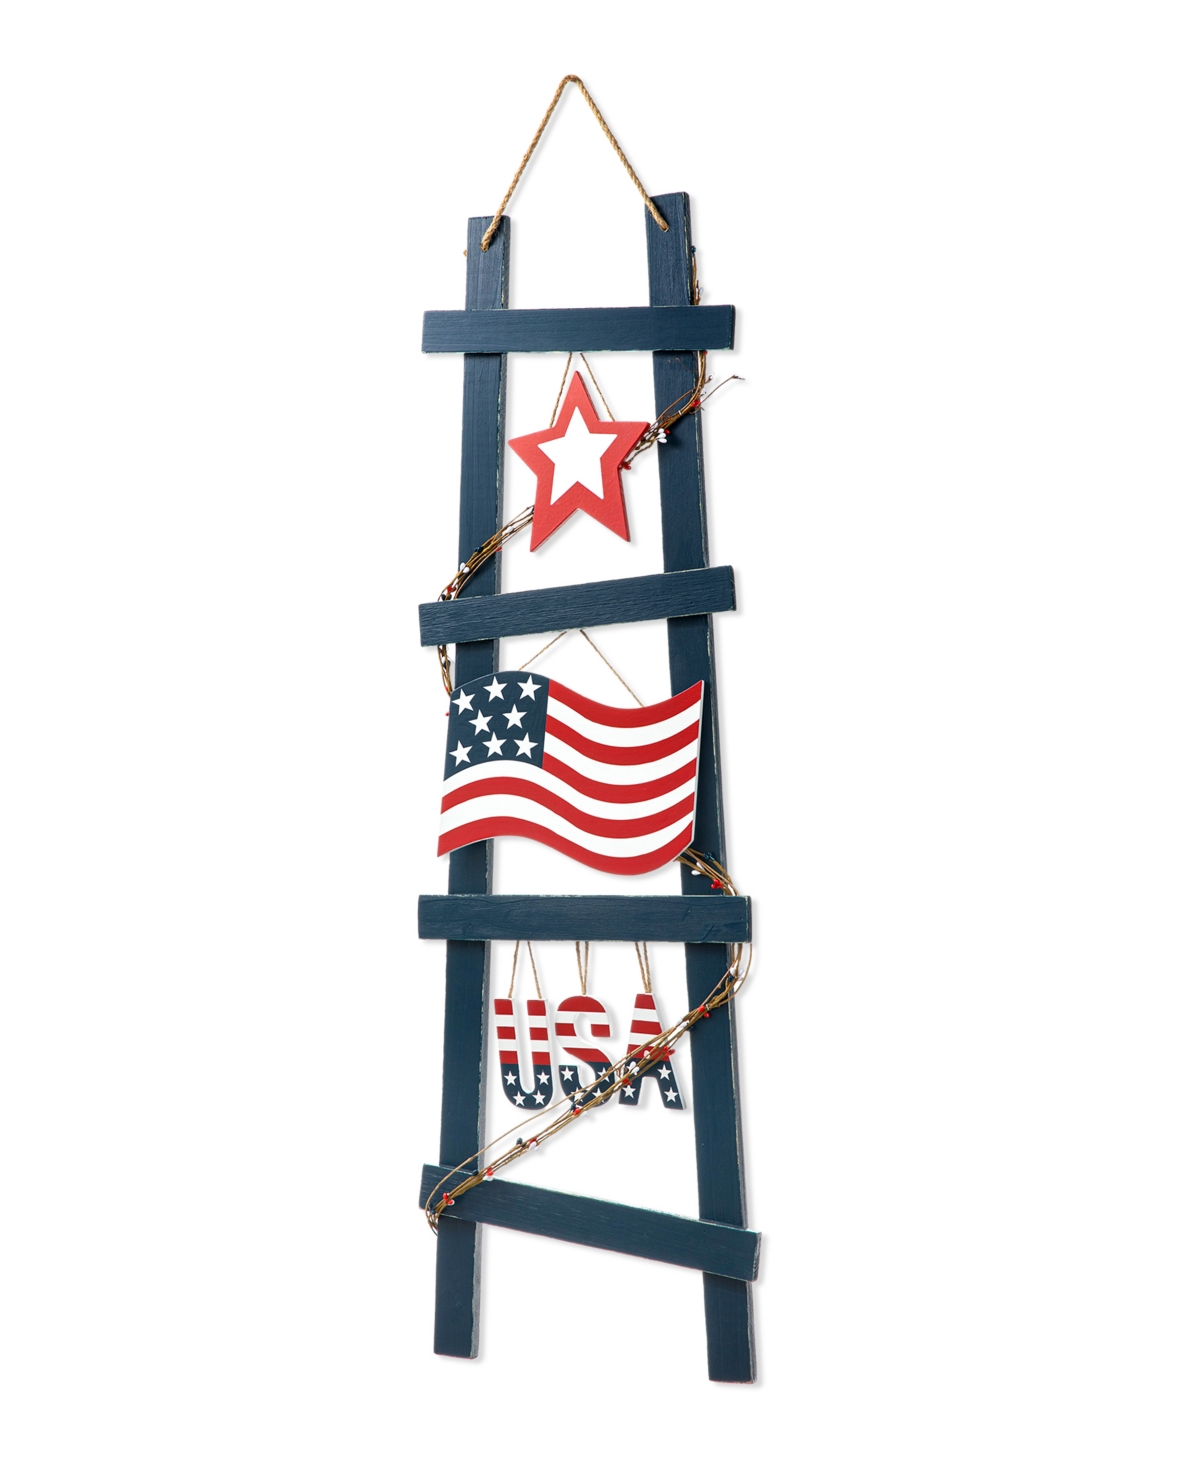 36" H Patriotic, Americana Ladder-Shaped "Usa" Porch Decor - Multi